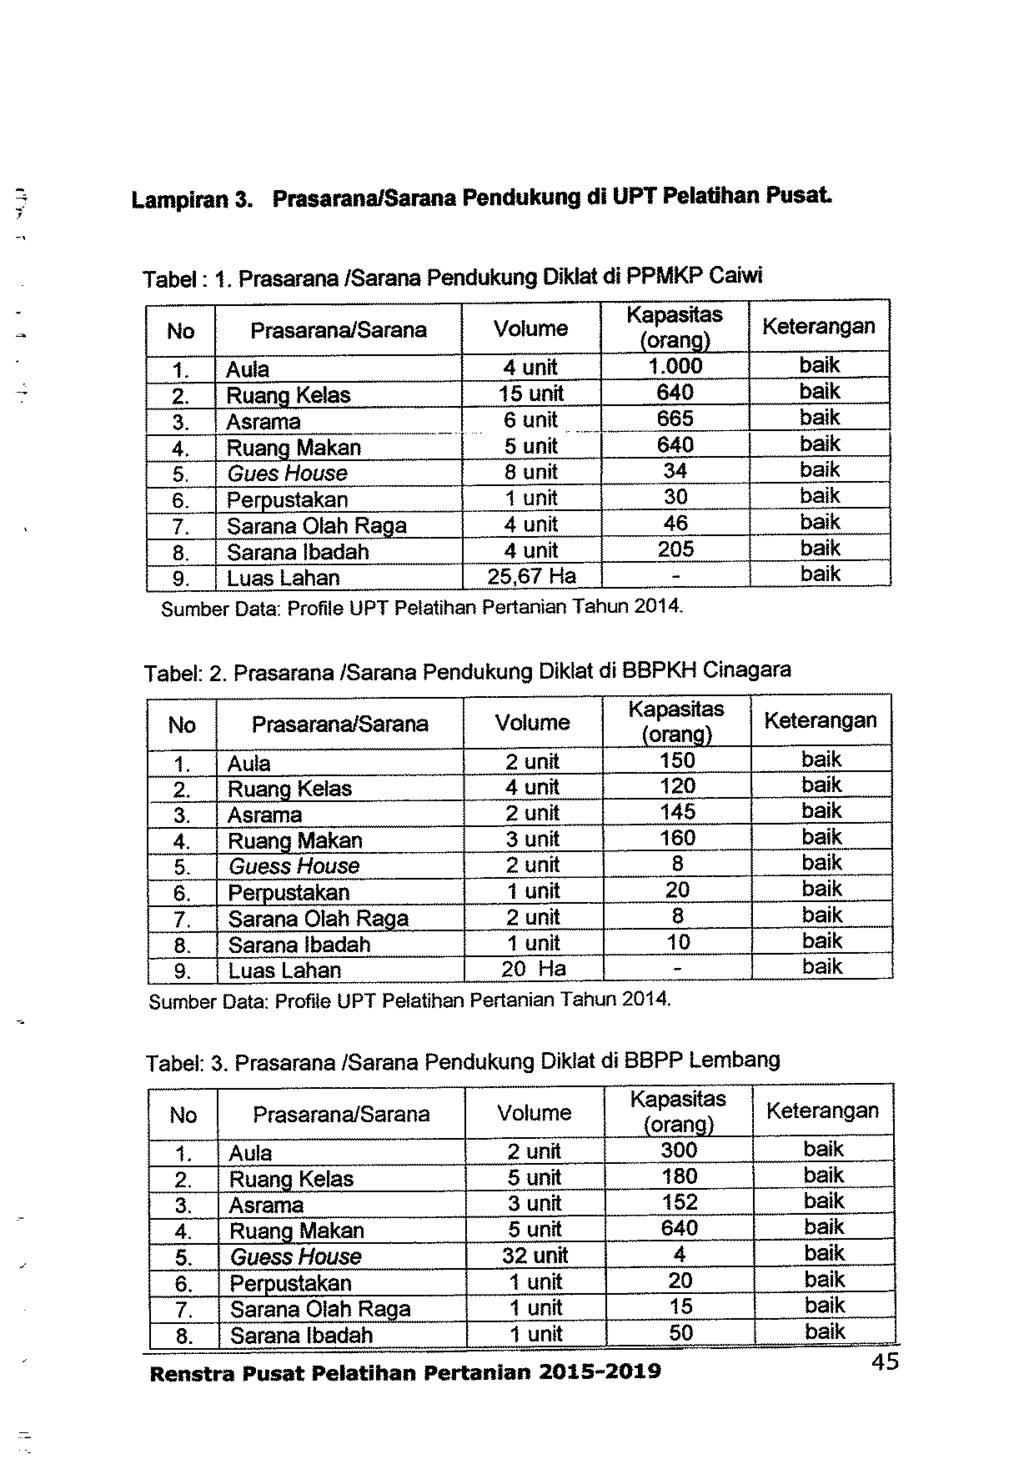 Lampiran 3. Prasarana/Sarana Pendukung di UPT Pelatihan Pusat Tabel: 1. Prasarana /Sarana Pendukung Diklat di PPMKP Caiwi No Prasarana/Sarana Volume Kapasitas (orang) Keterangan 1. Aula 4 unit 1.